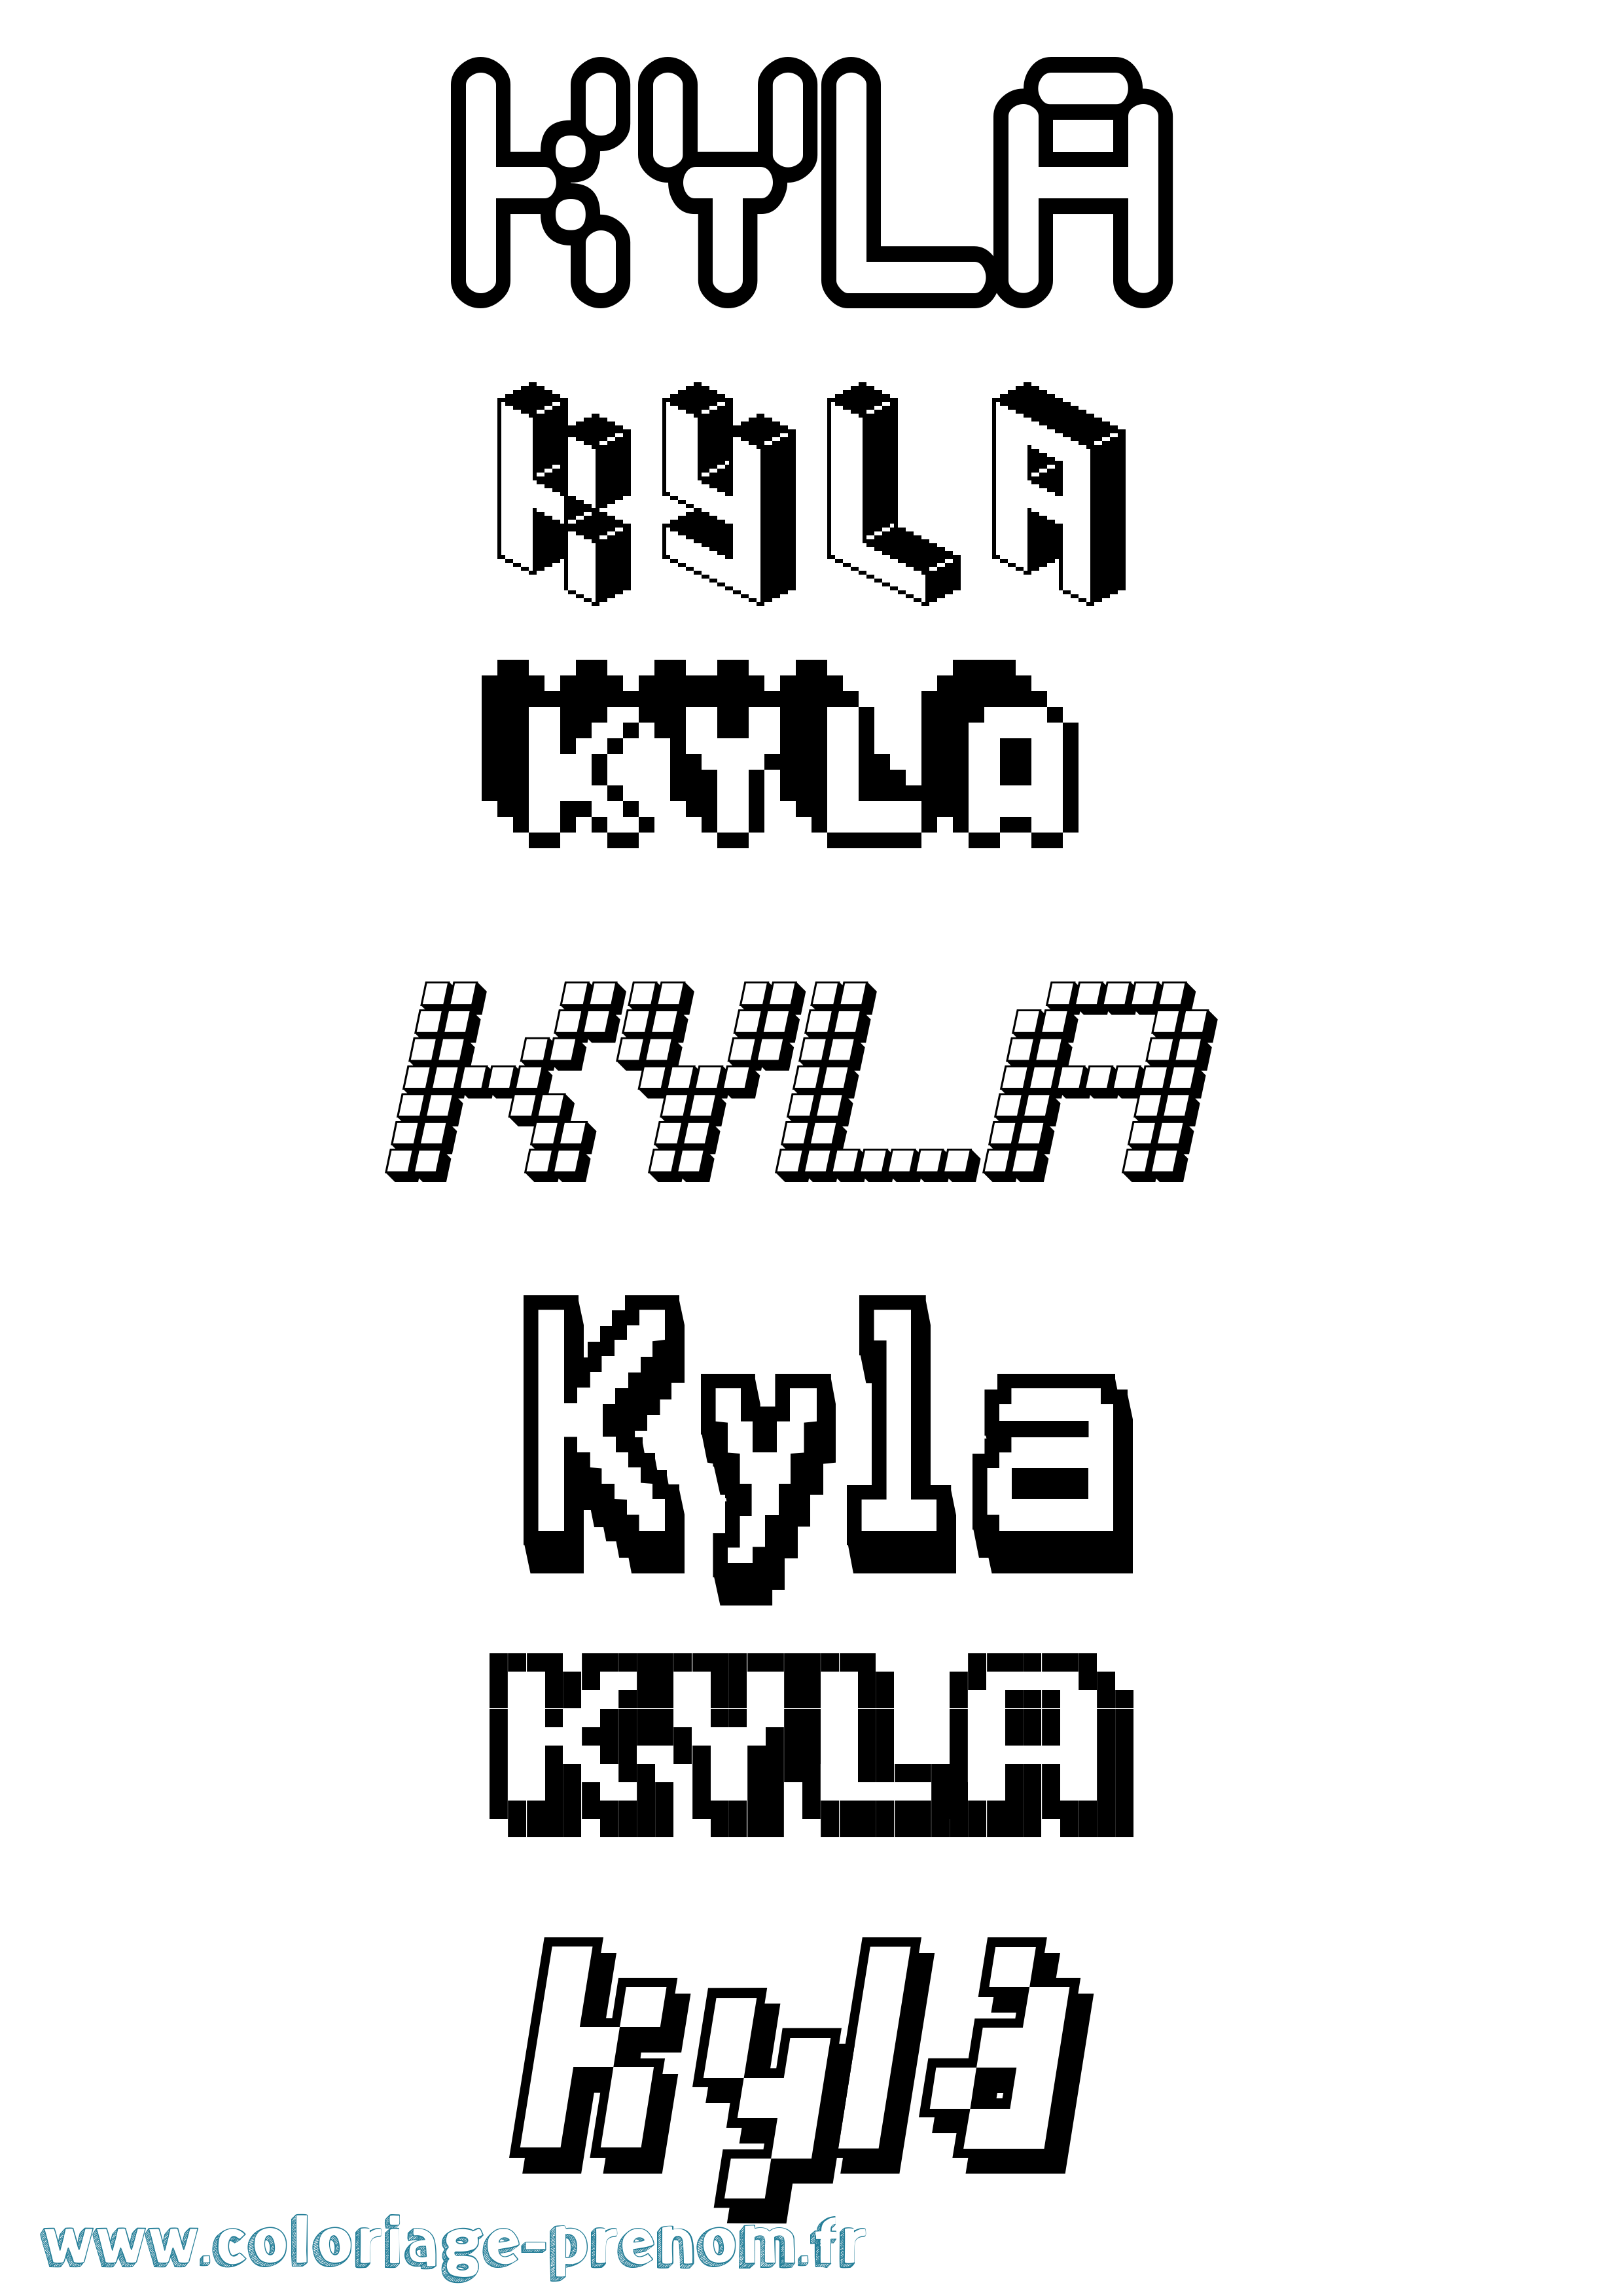 Coloriage prénom Kyla Pixel